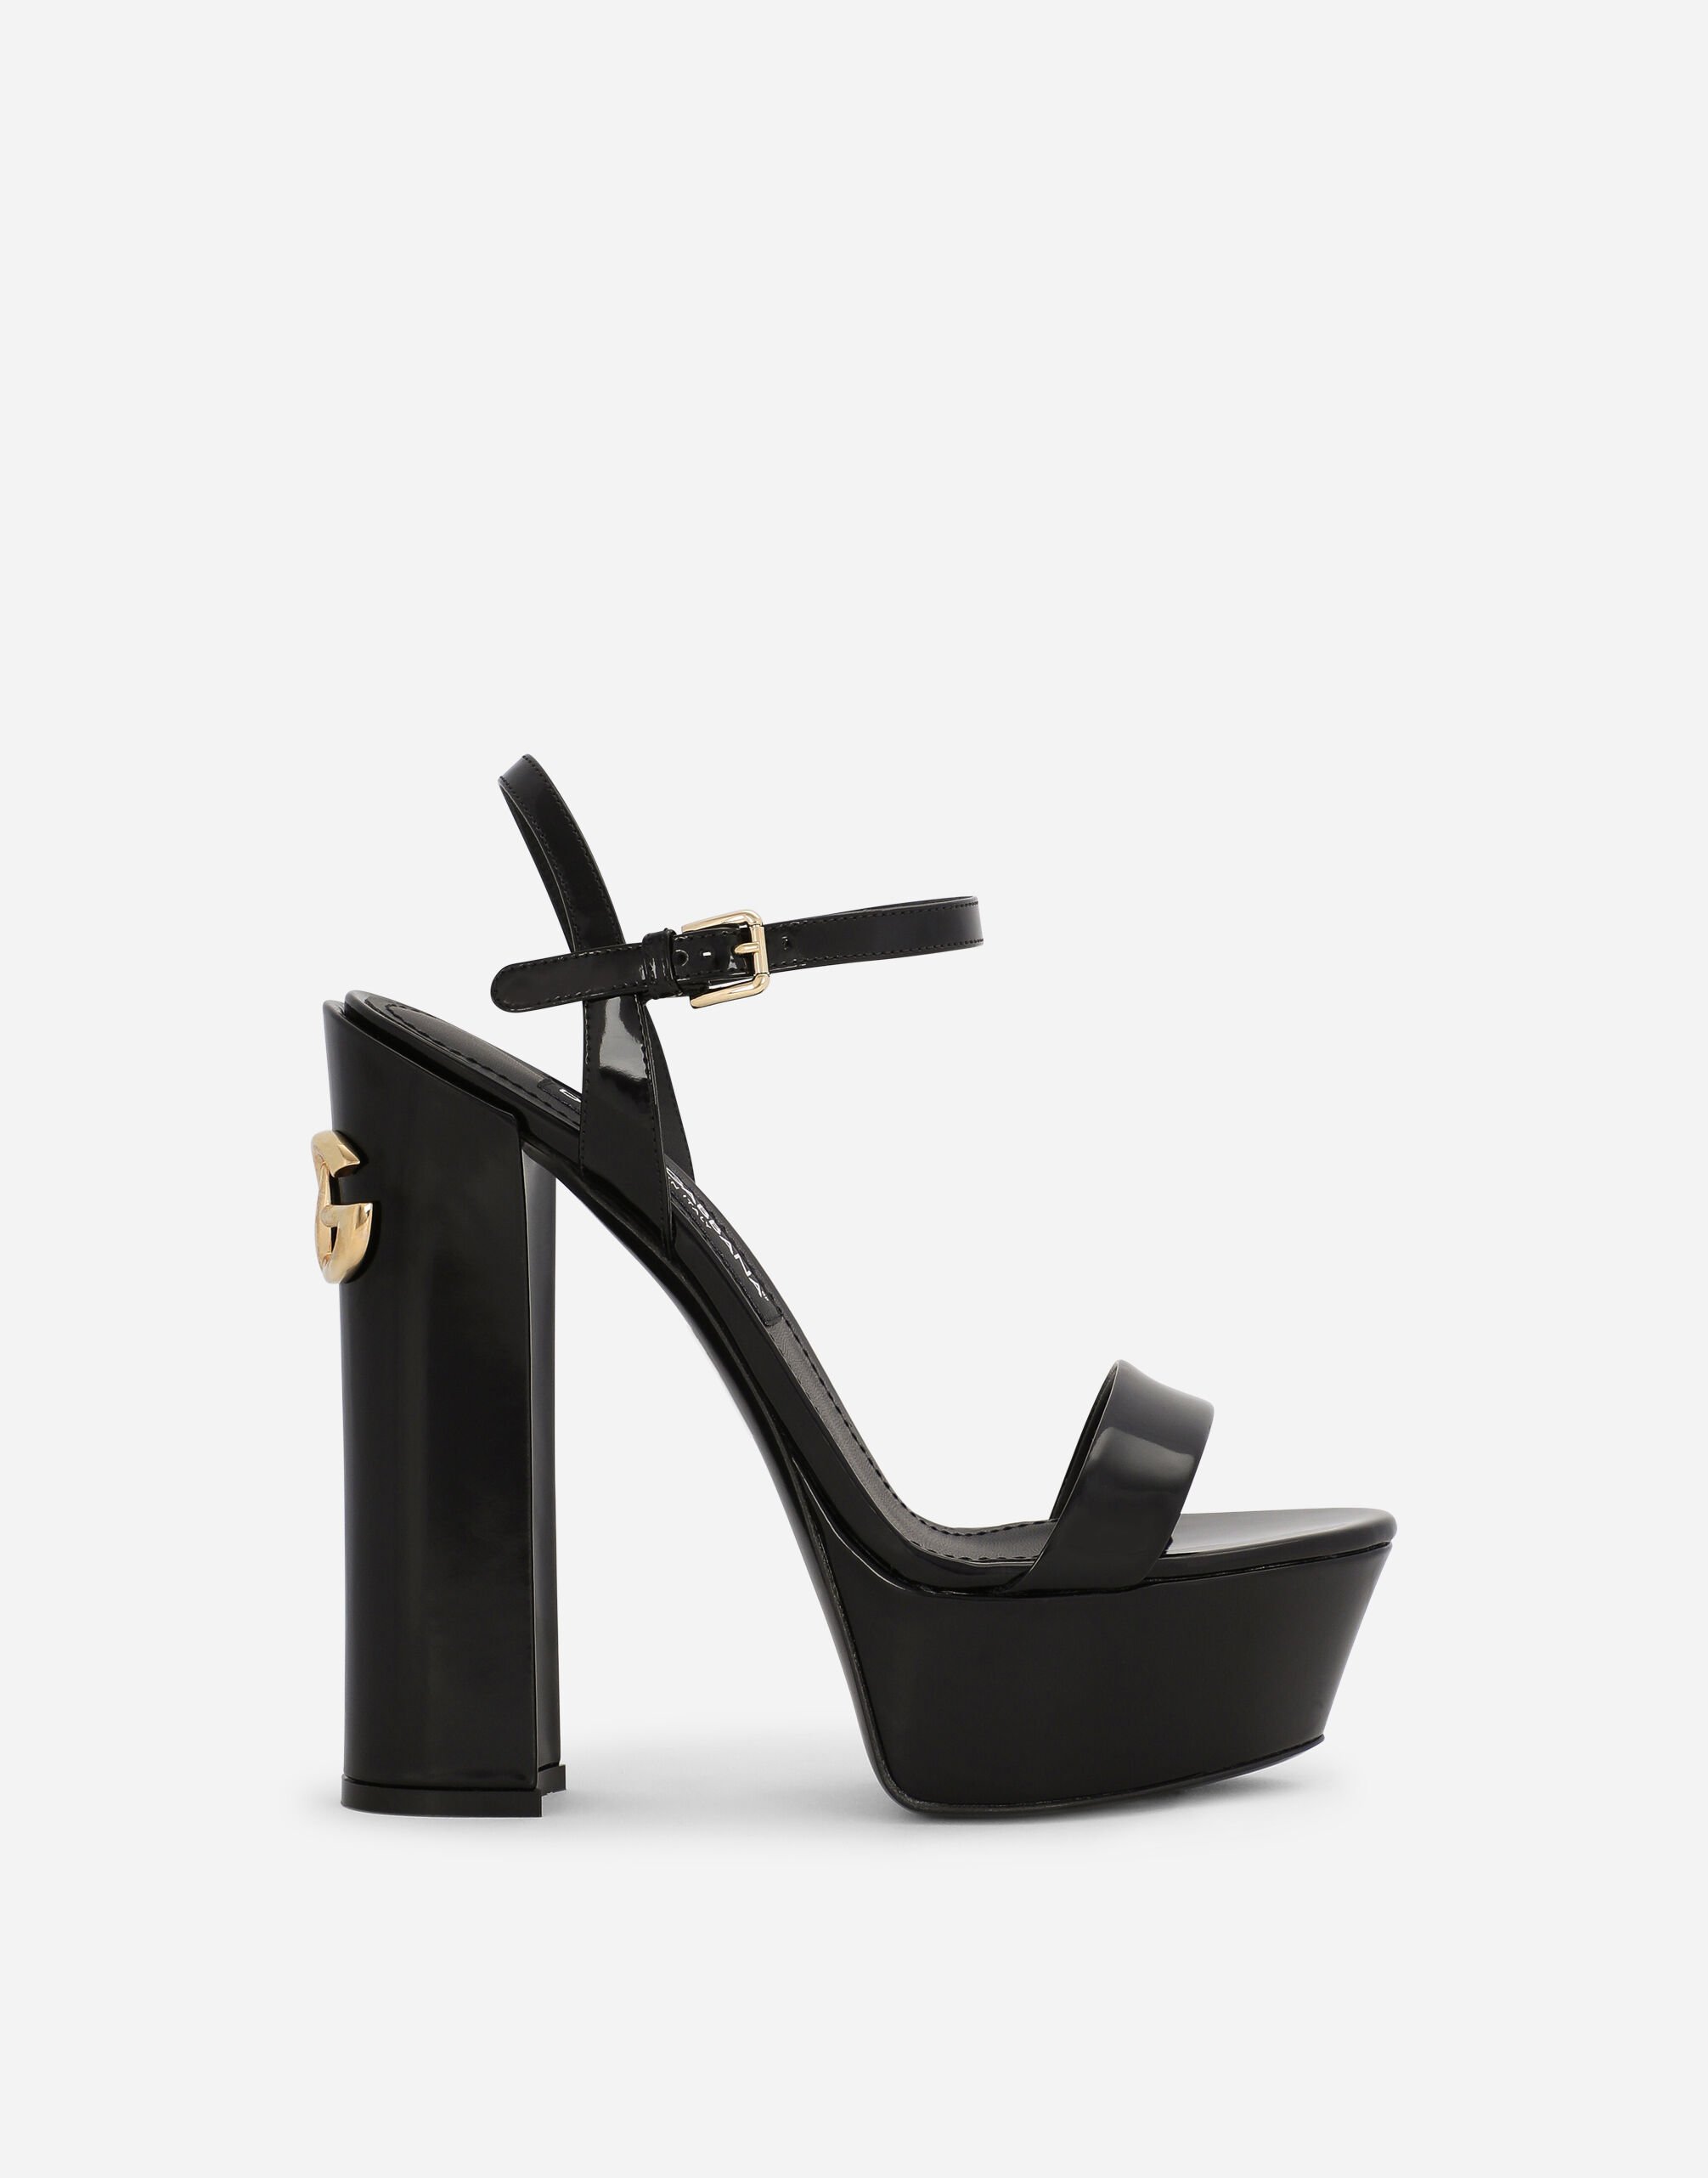 Dolce&Gabbana Polished calfskin platform sandals Black GY6IETFUFJR